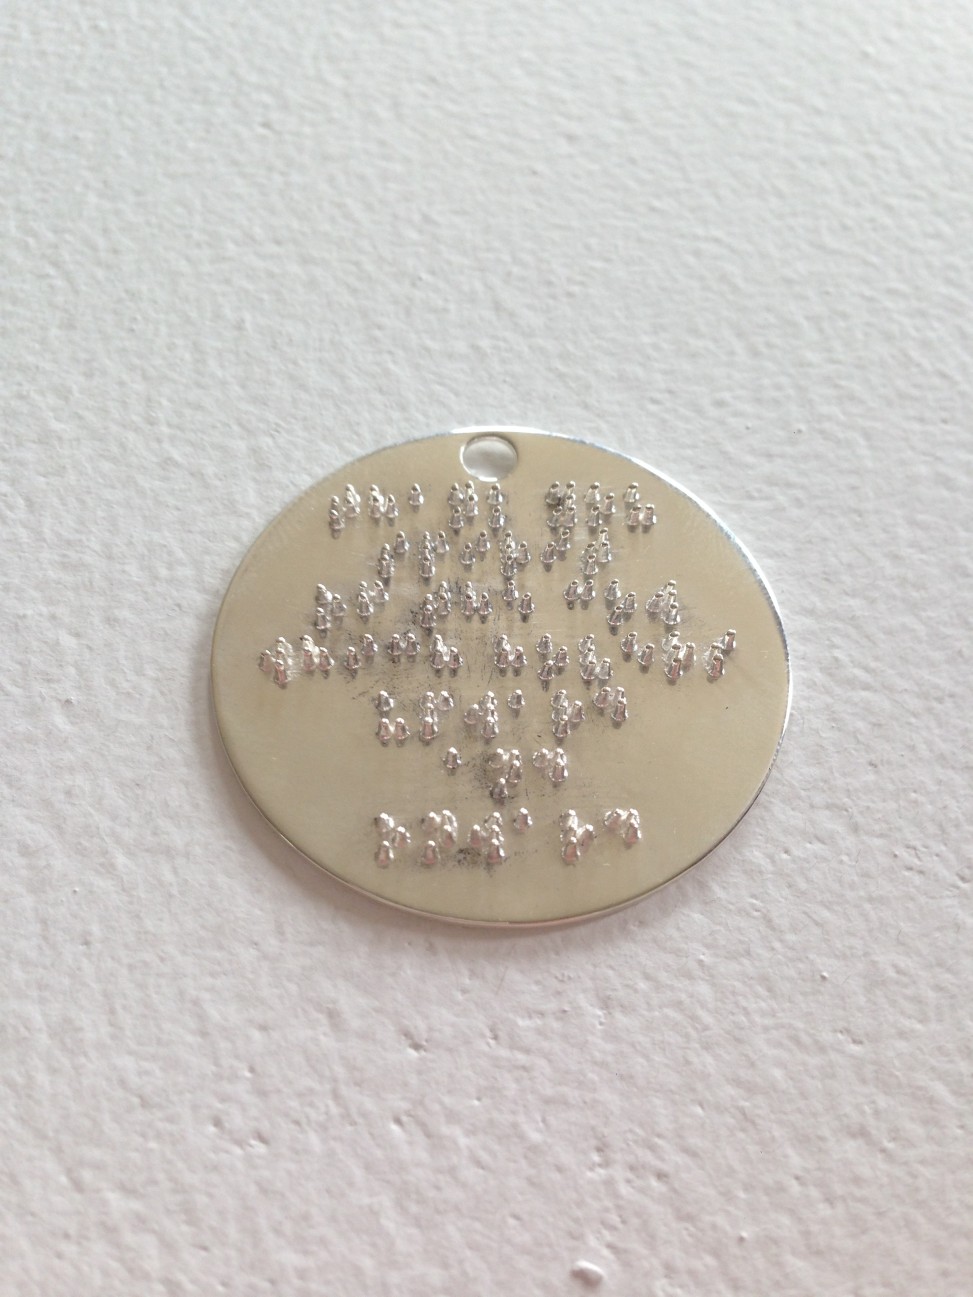 "Braille Coin" by Andrew Rosinski